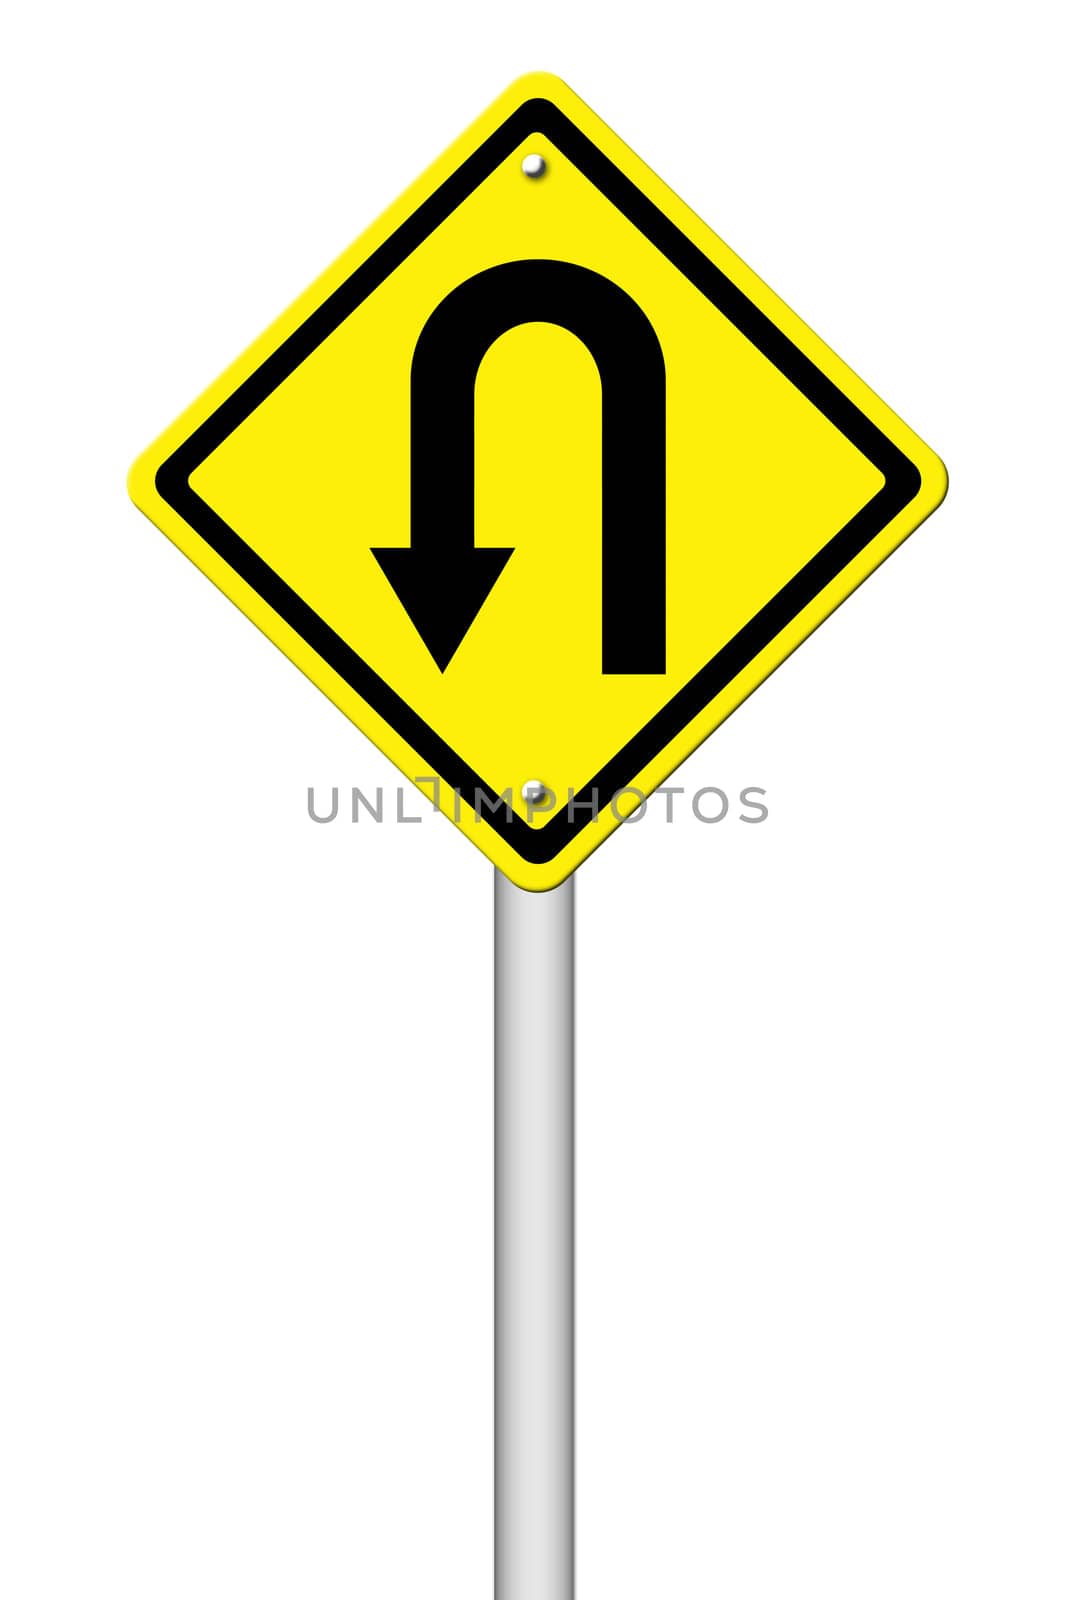 Yellow warning sign u-turn roadsign on white background